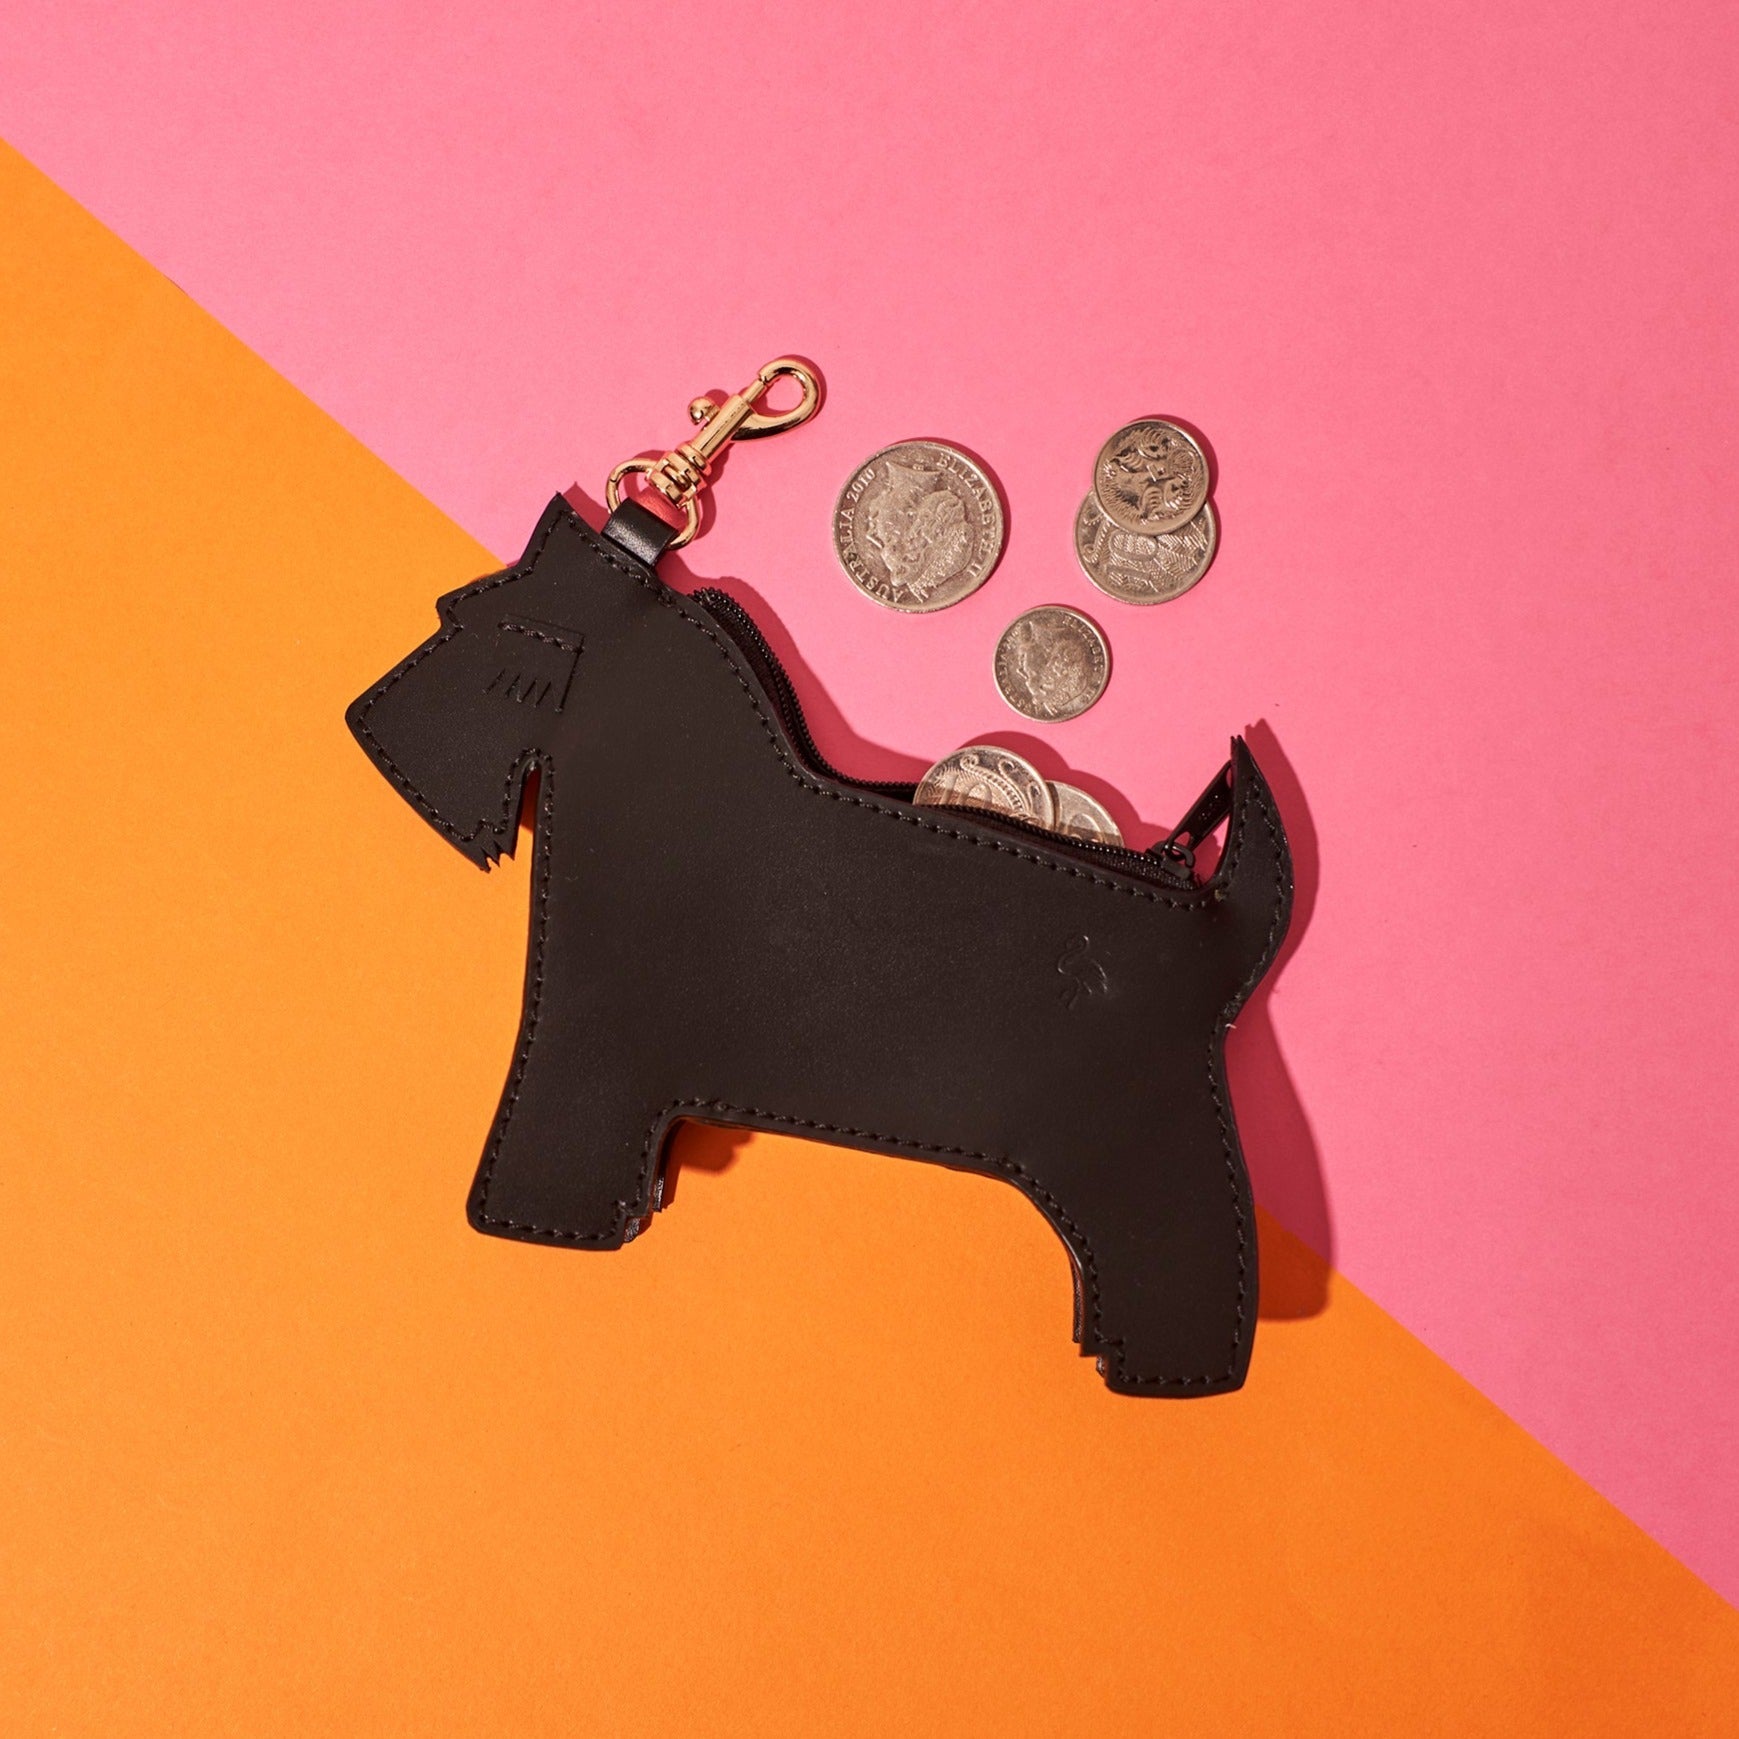 Scottie the Scottish Terrier Wicker Darling coin purse on an orange, pink background